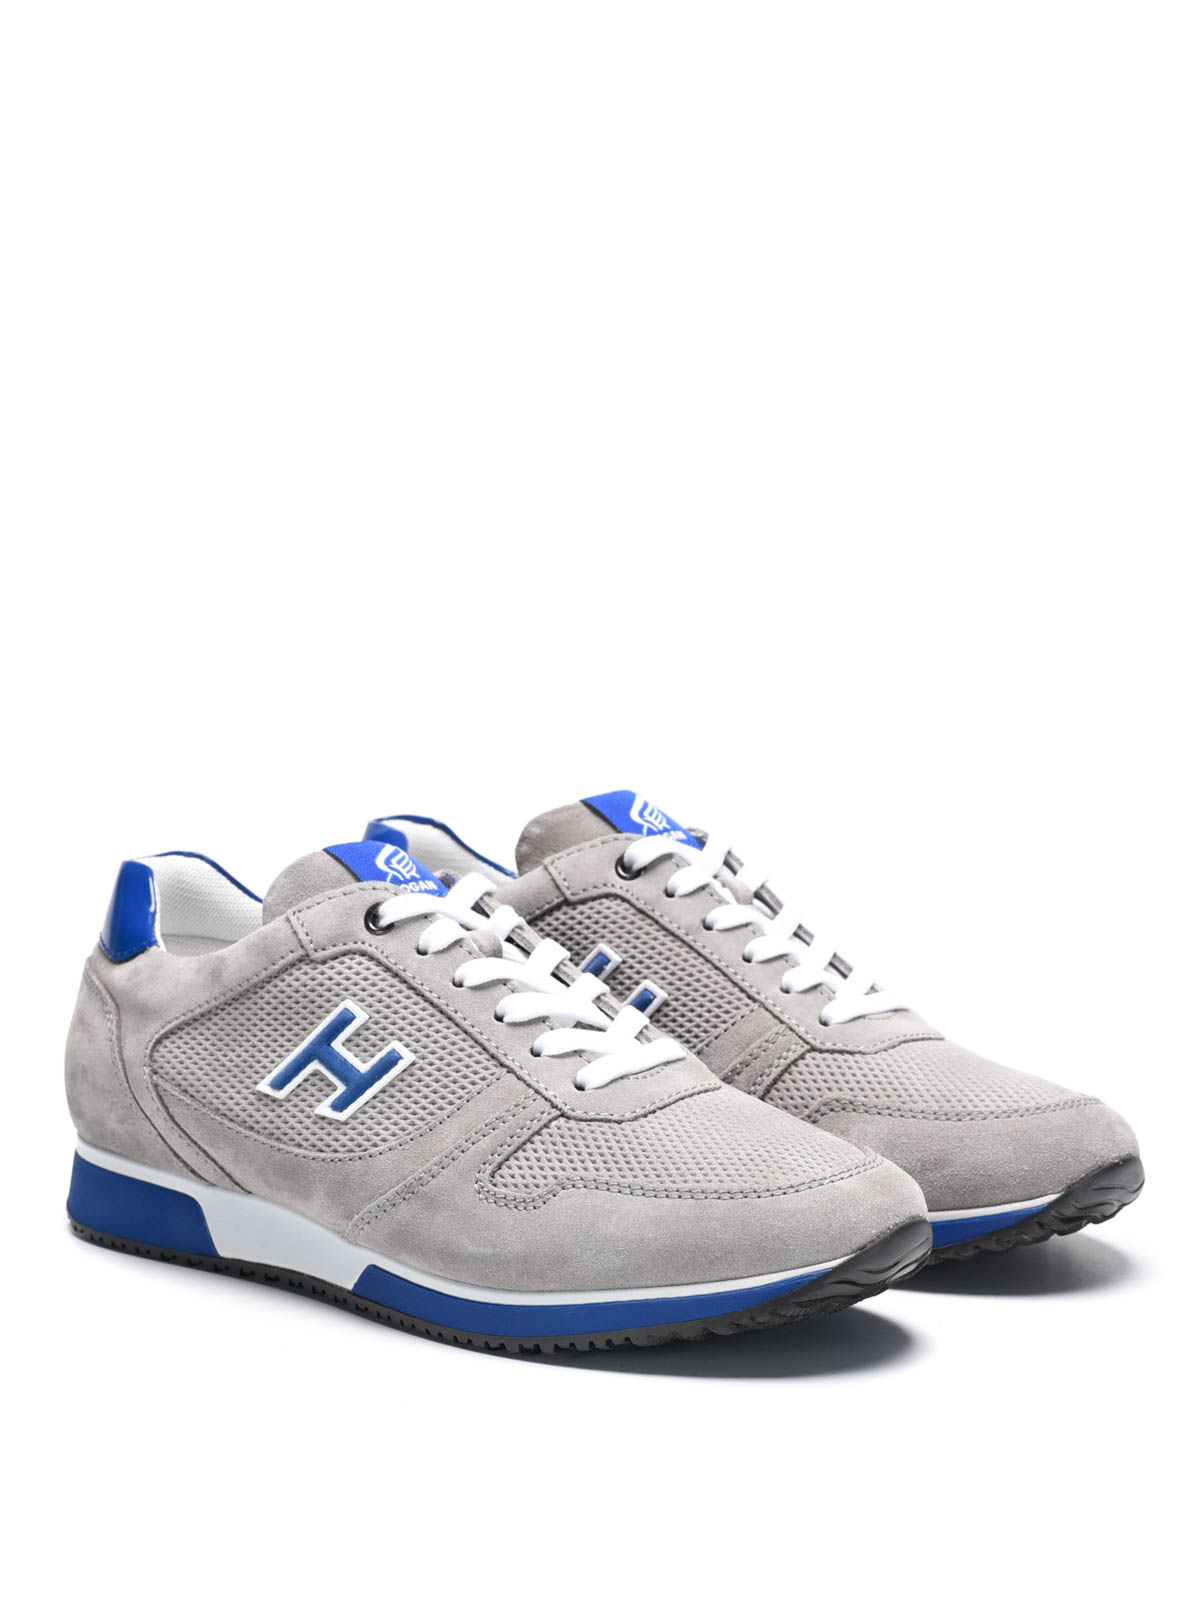 Hogan - H198 sneakers - trainers - XMM1980T850C50234N | iKRIX.com